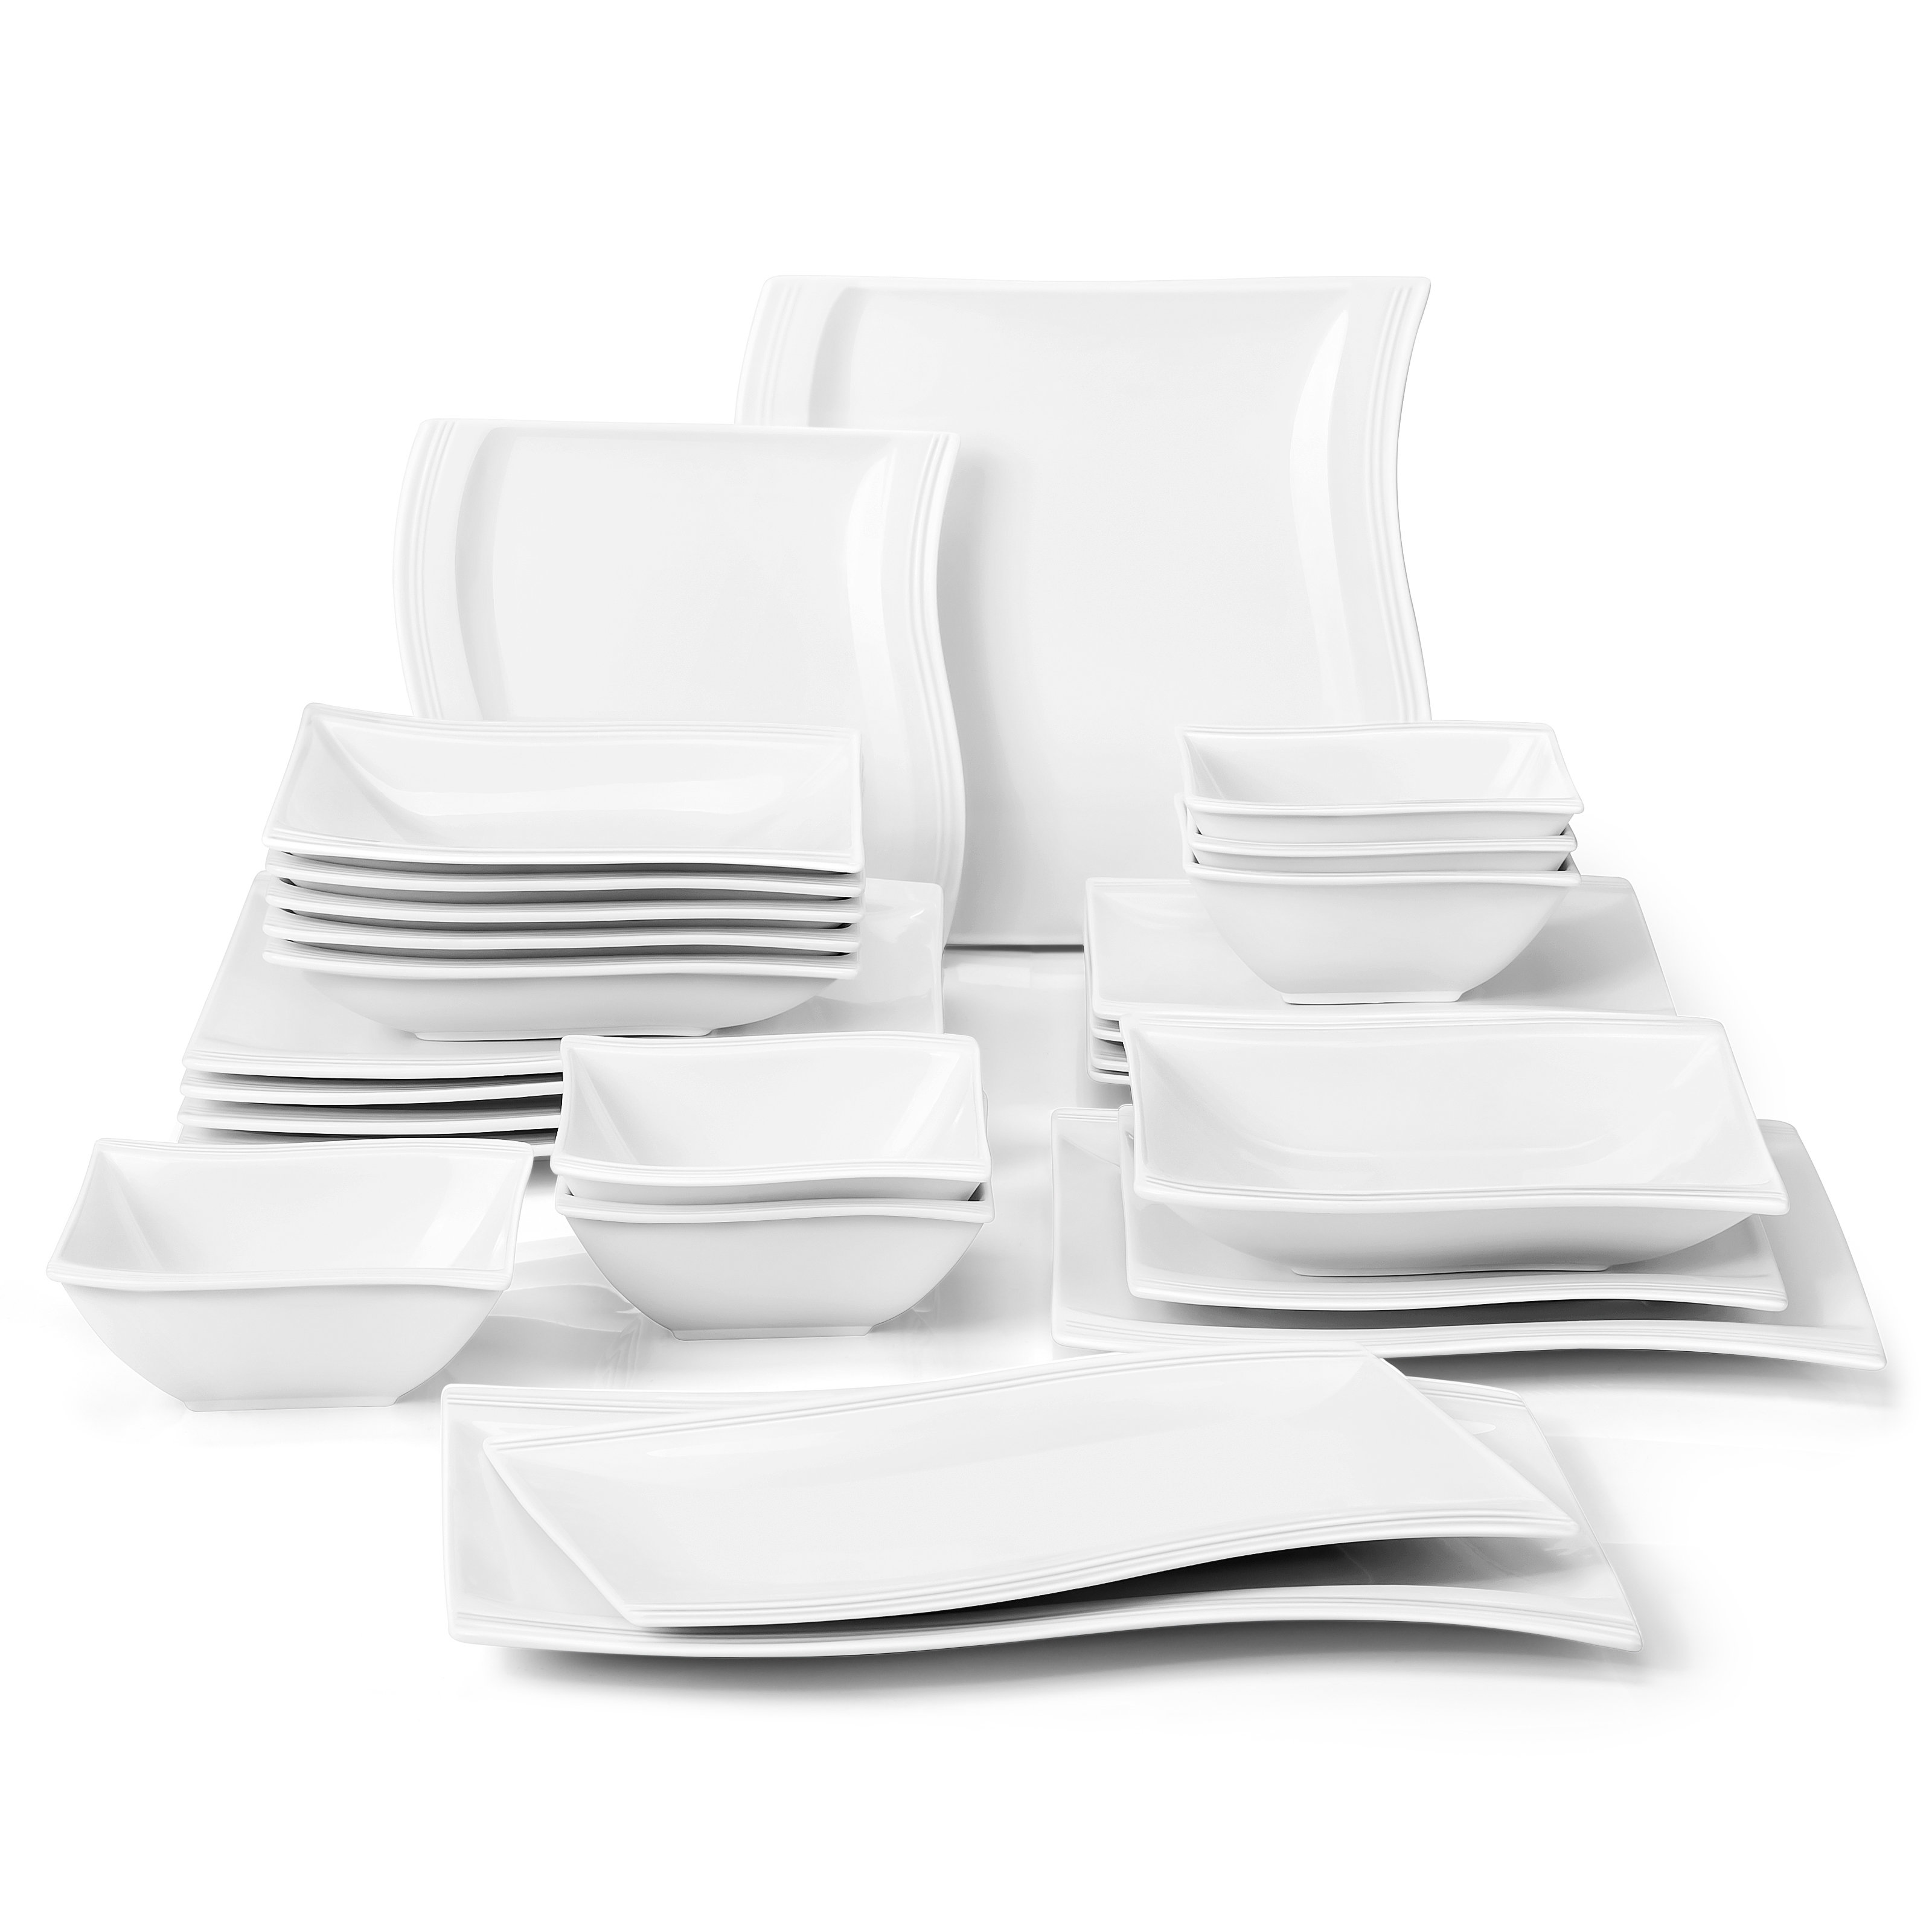 MALACASA Dishes Set for 4, 16 Piece Bone China White Plates and